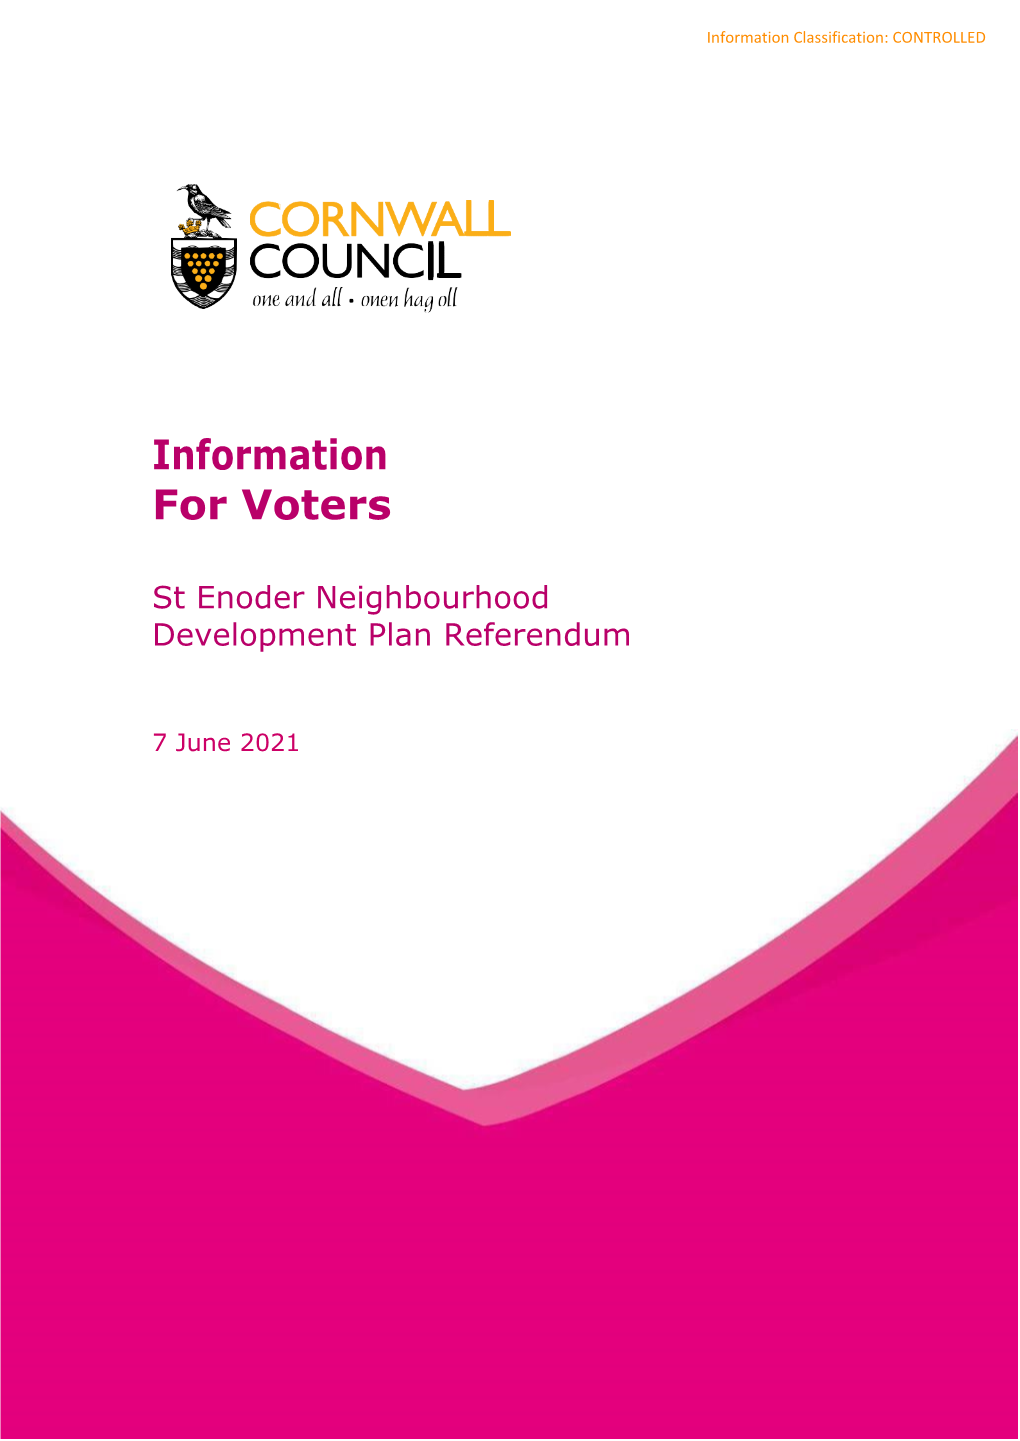 Information for Voters on St Enoder Neighbourhood Plan Referendum